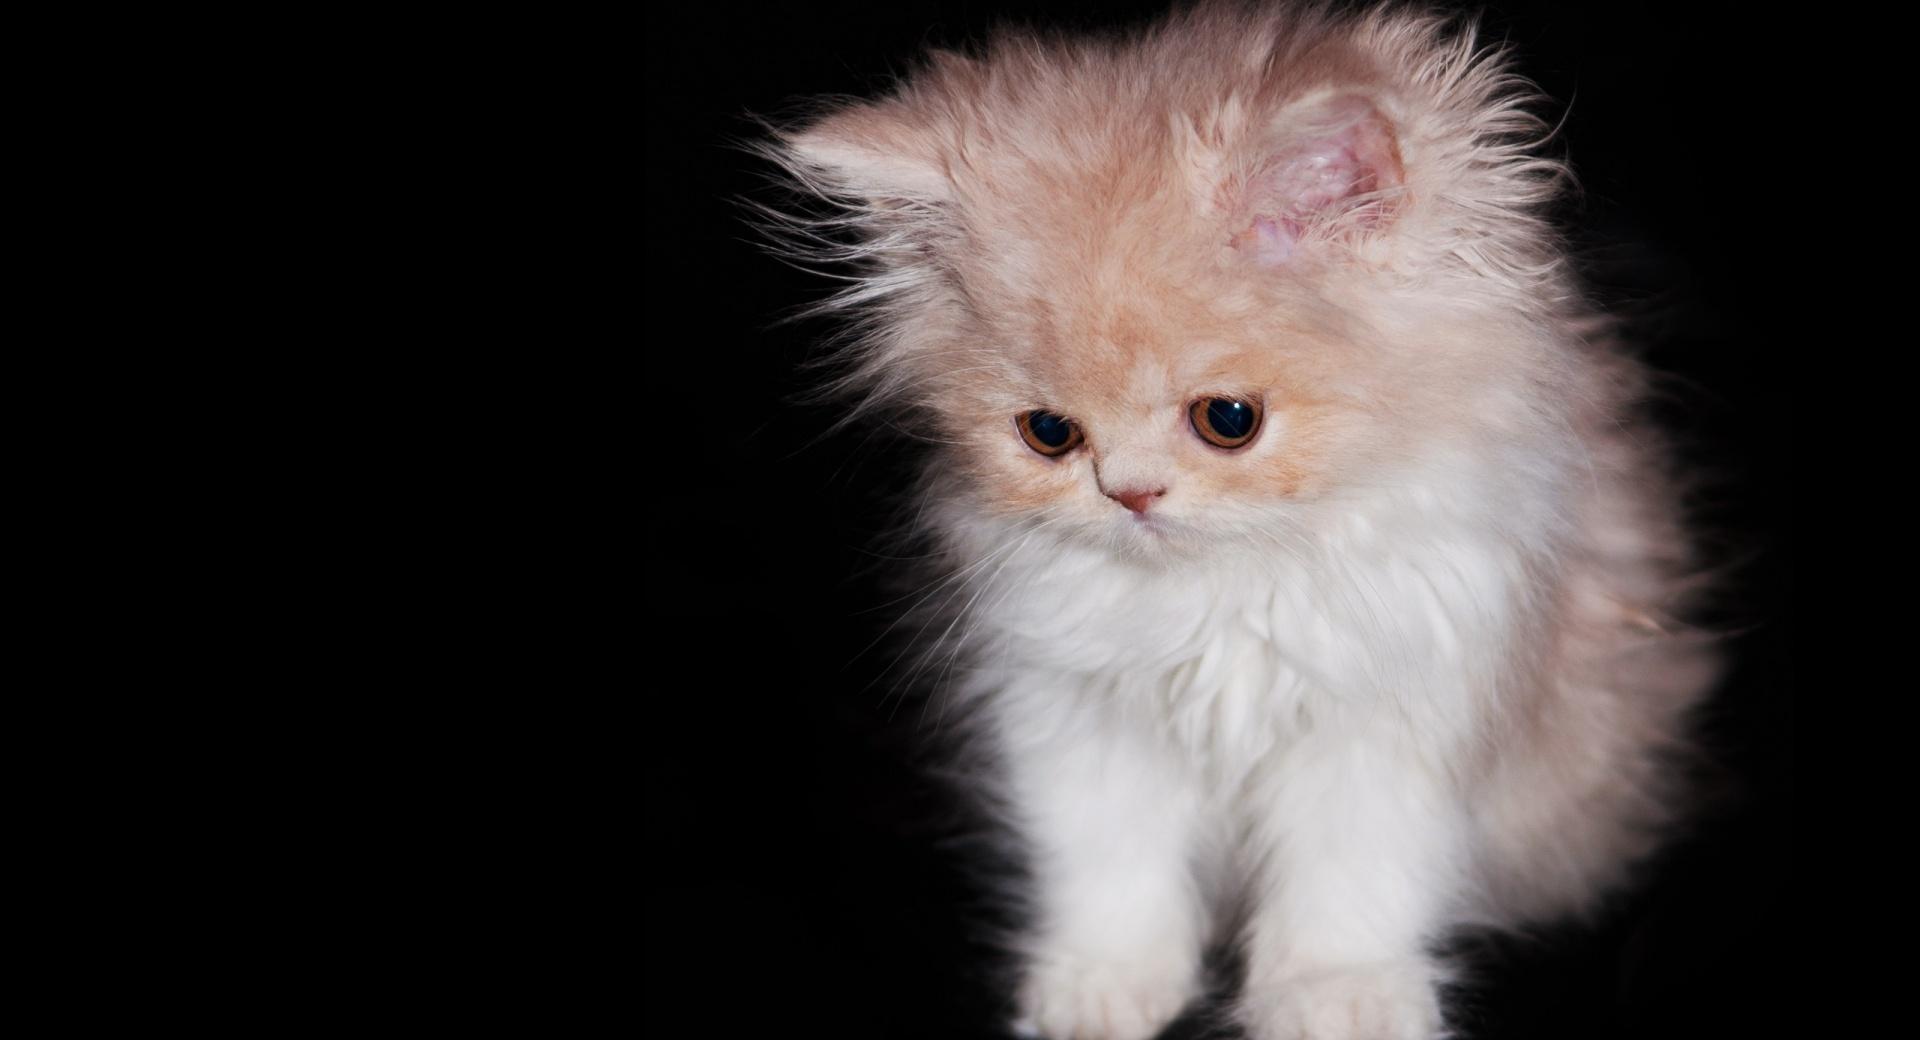 Cute Persian Kitten at 2048 x 2048 iPad size wallpapers HD quality